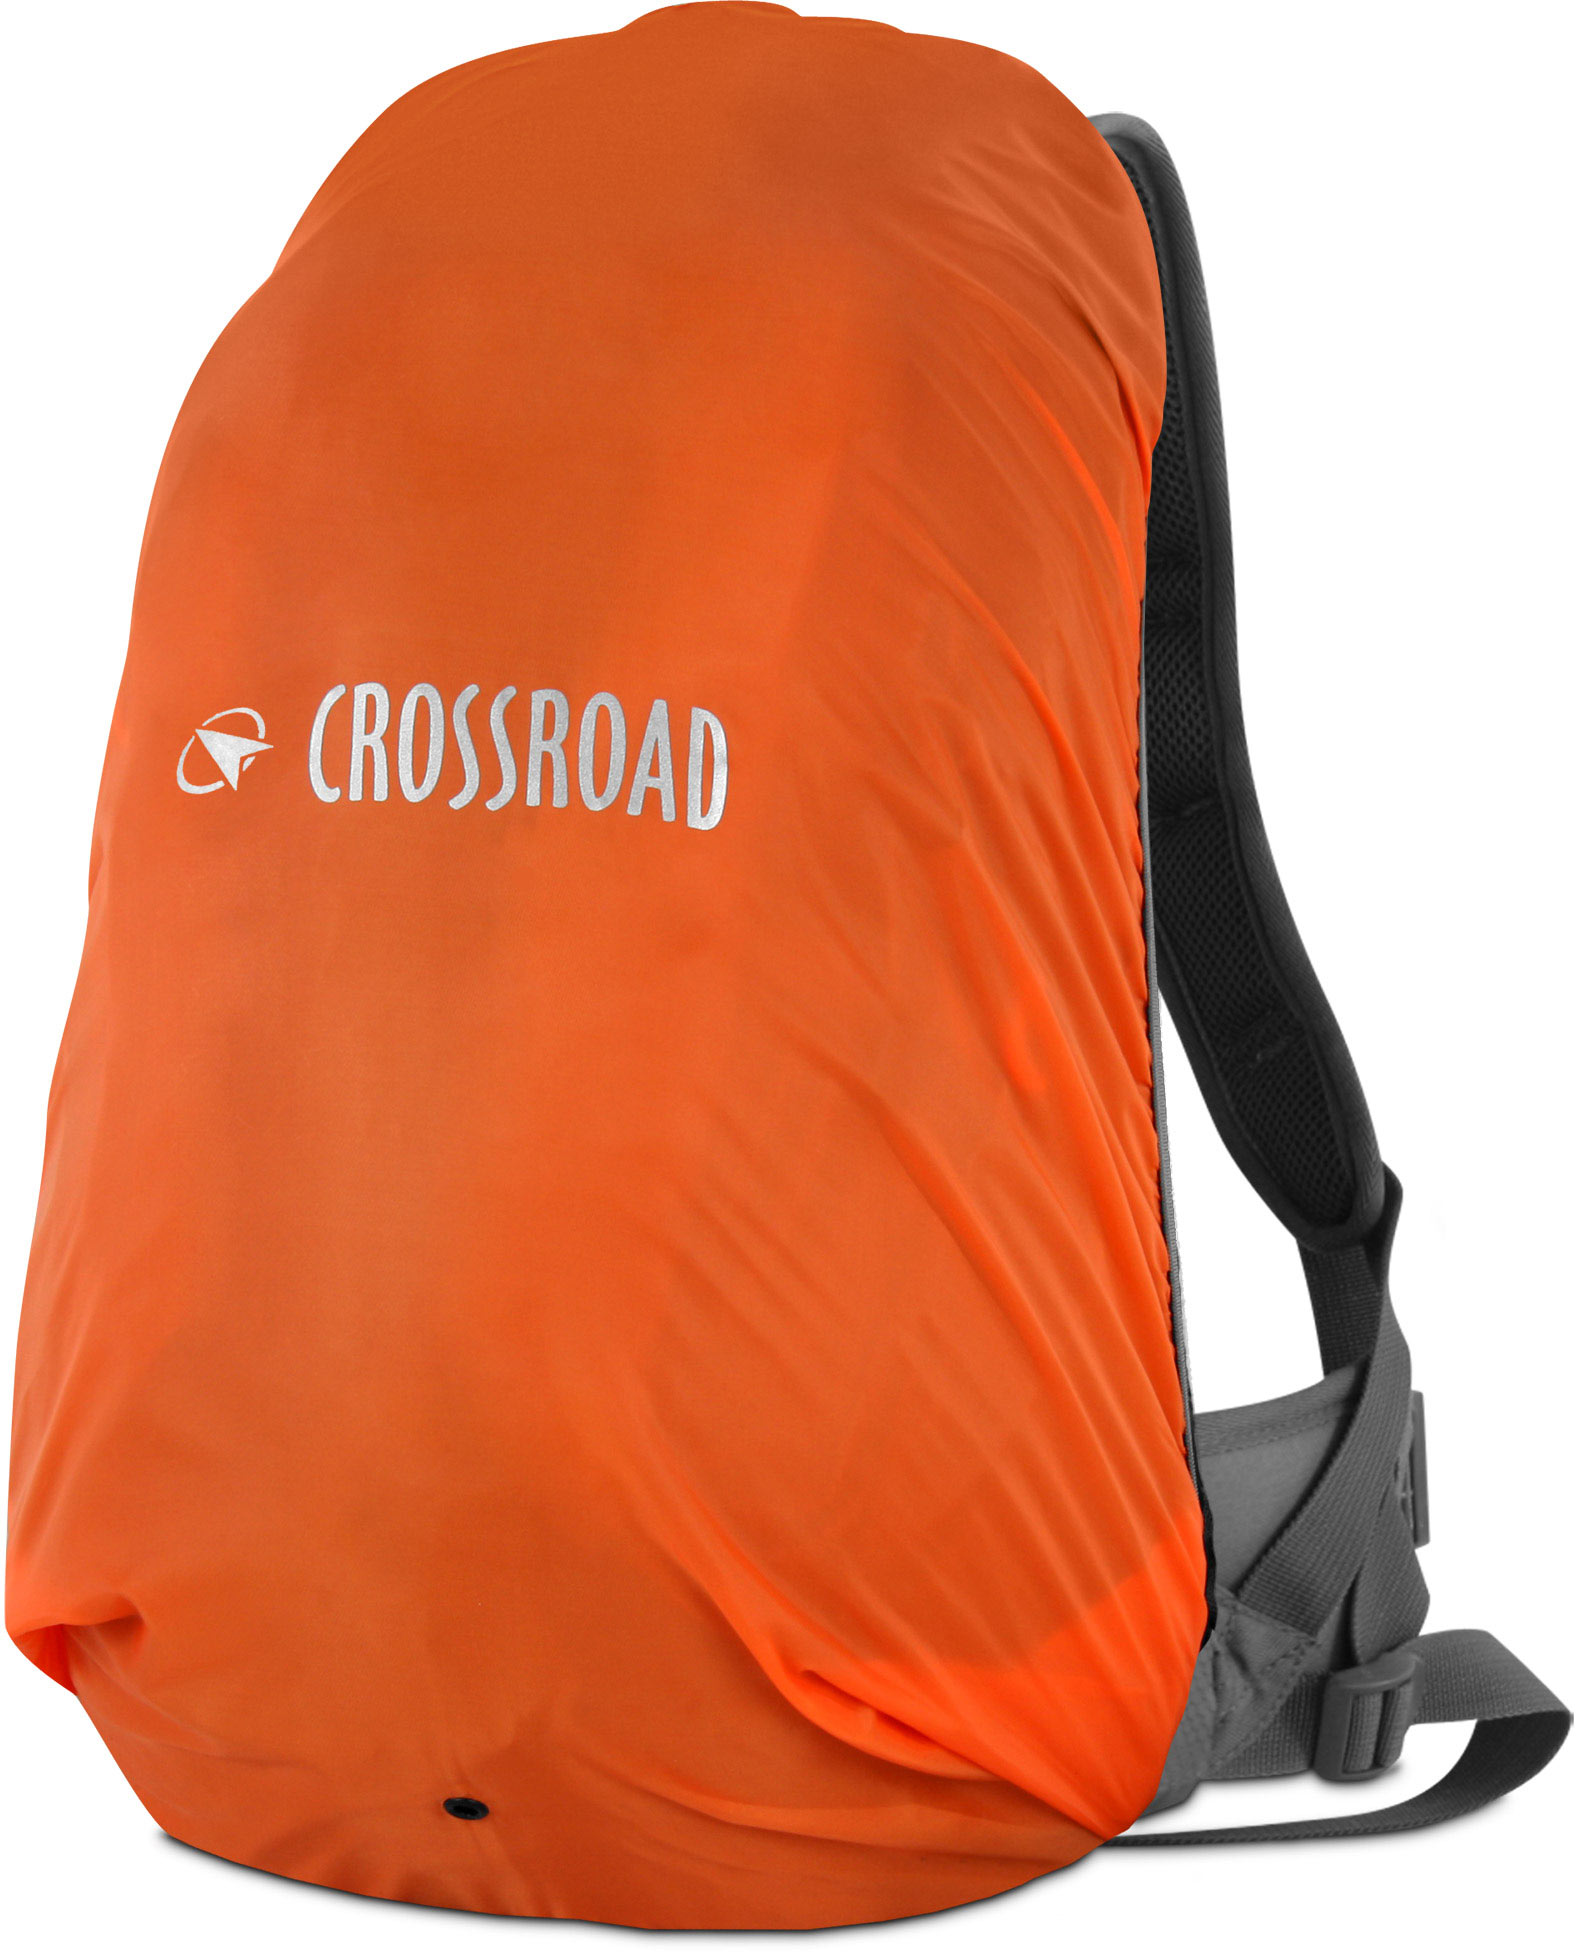 Universal raincoat for backpacks